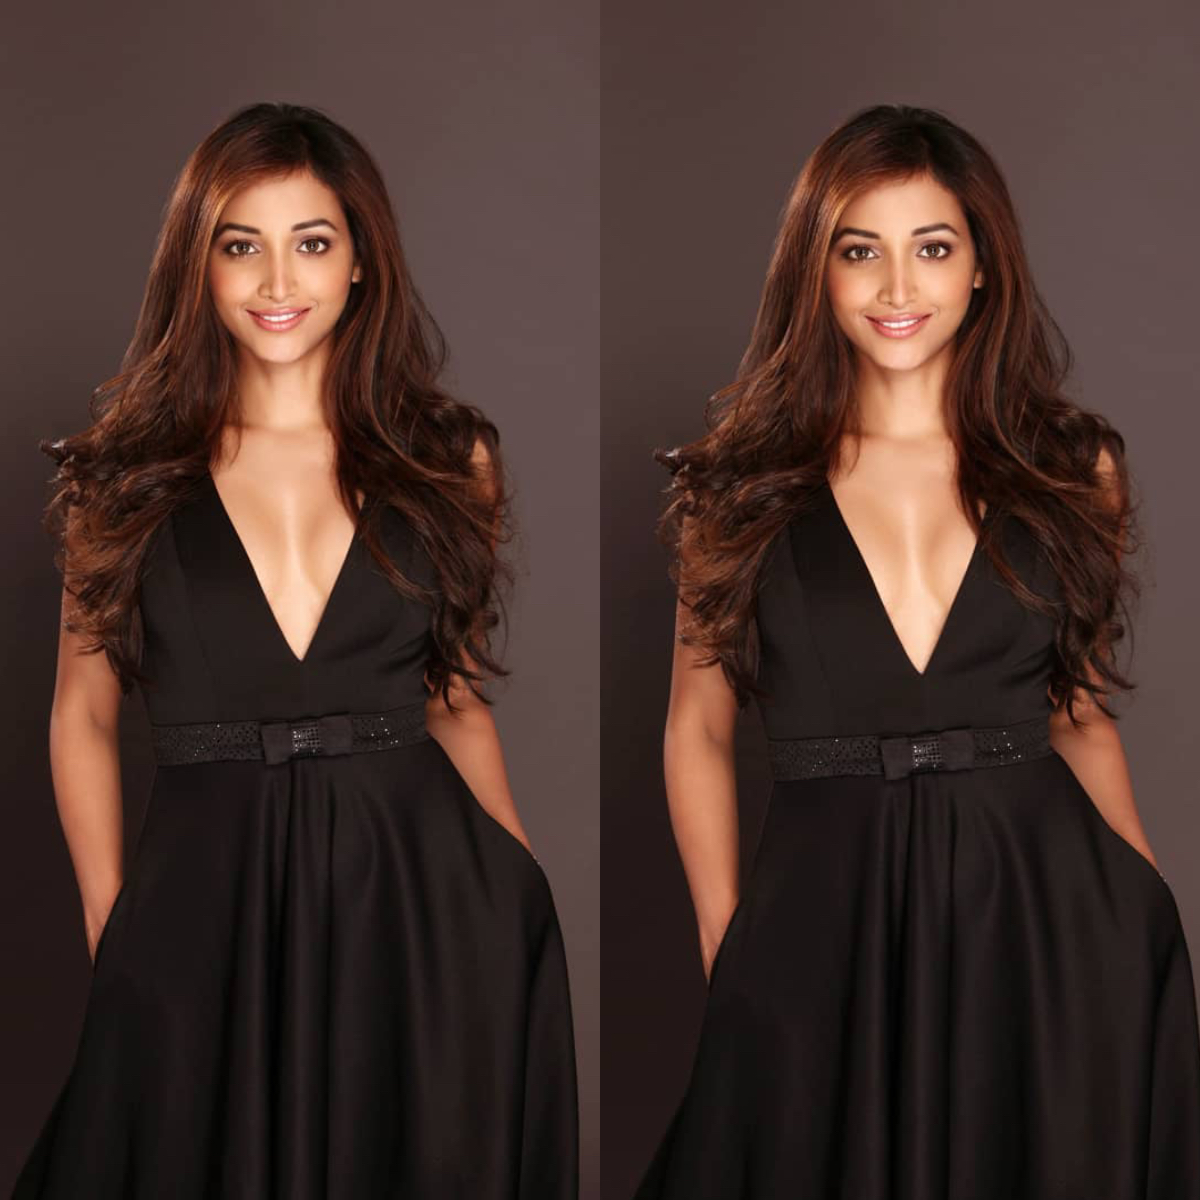 Srinidhi Shetty stunning looks in black